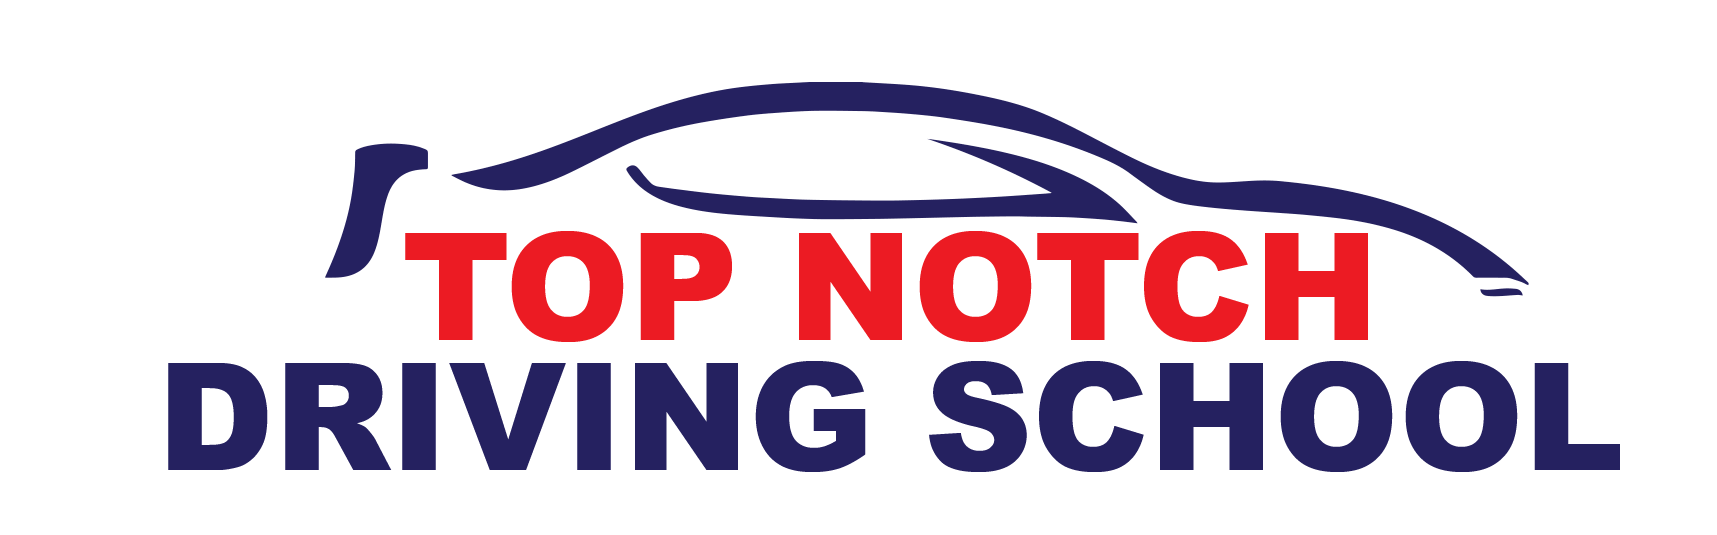 Top Notch Driving School – Adult